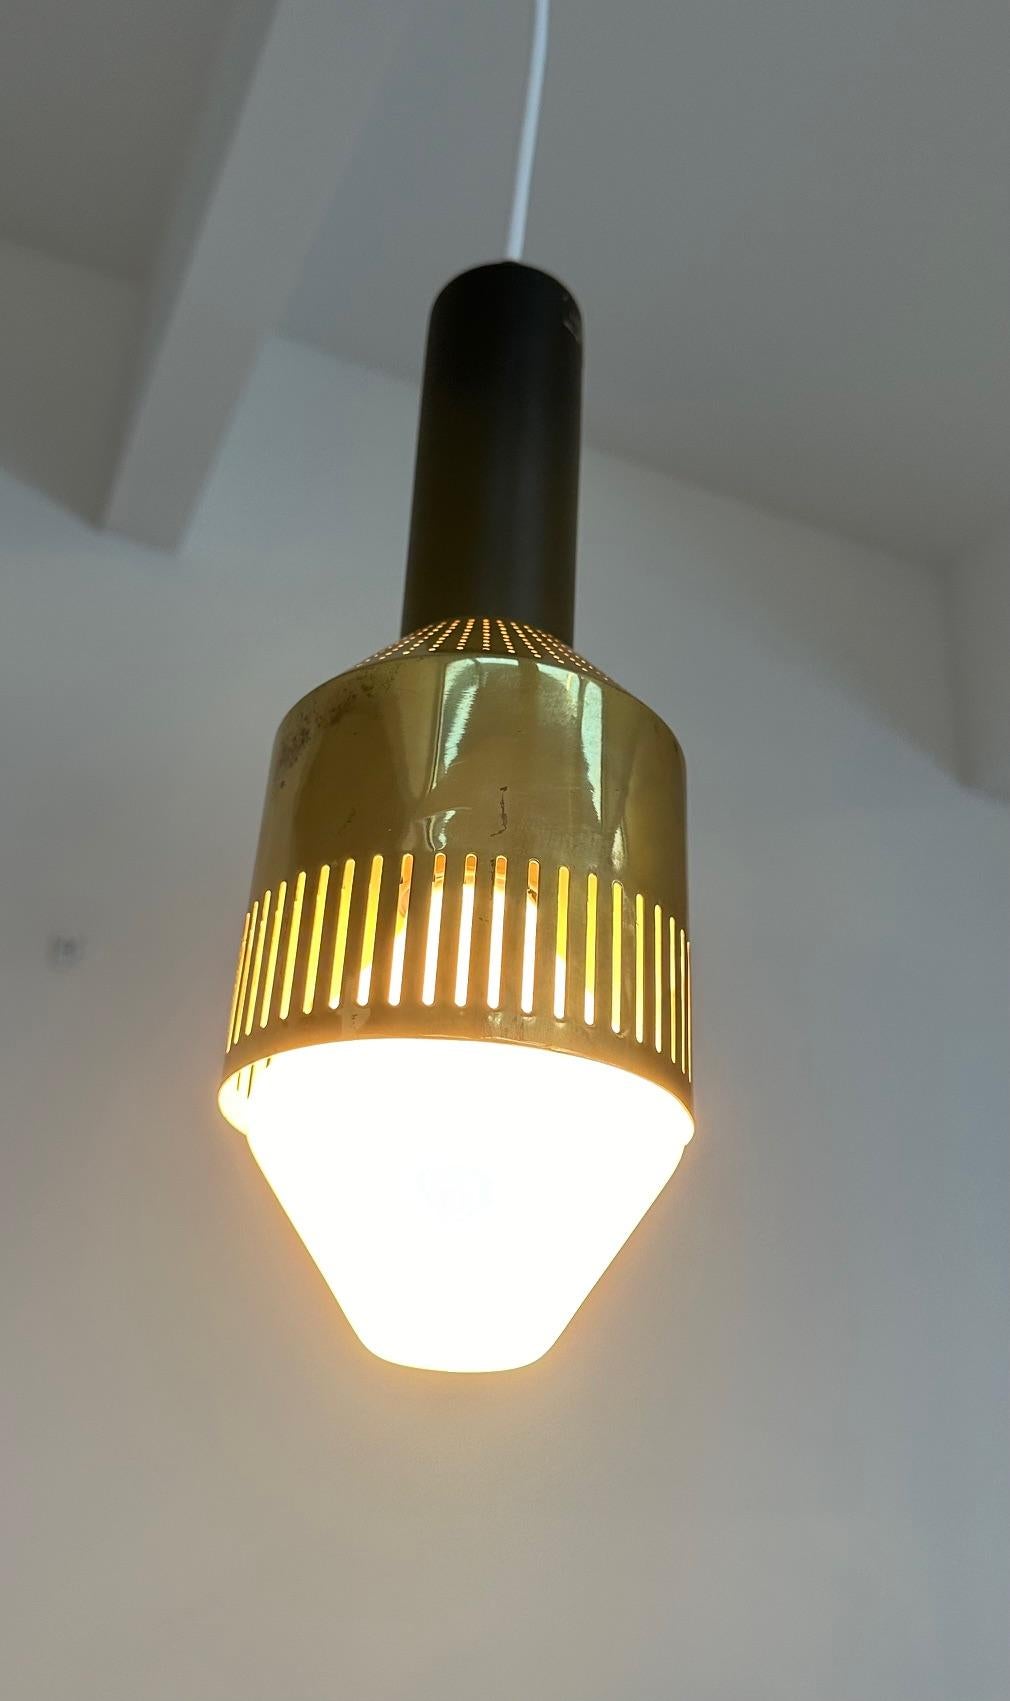 Finnish Tapio Wirkkala Rare Ceiling Lamp by Idman Oy Finland 1959-1961 For Sale